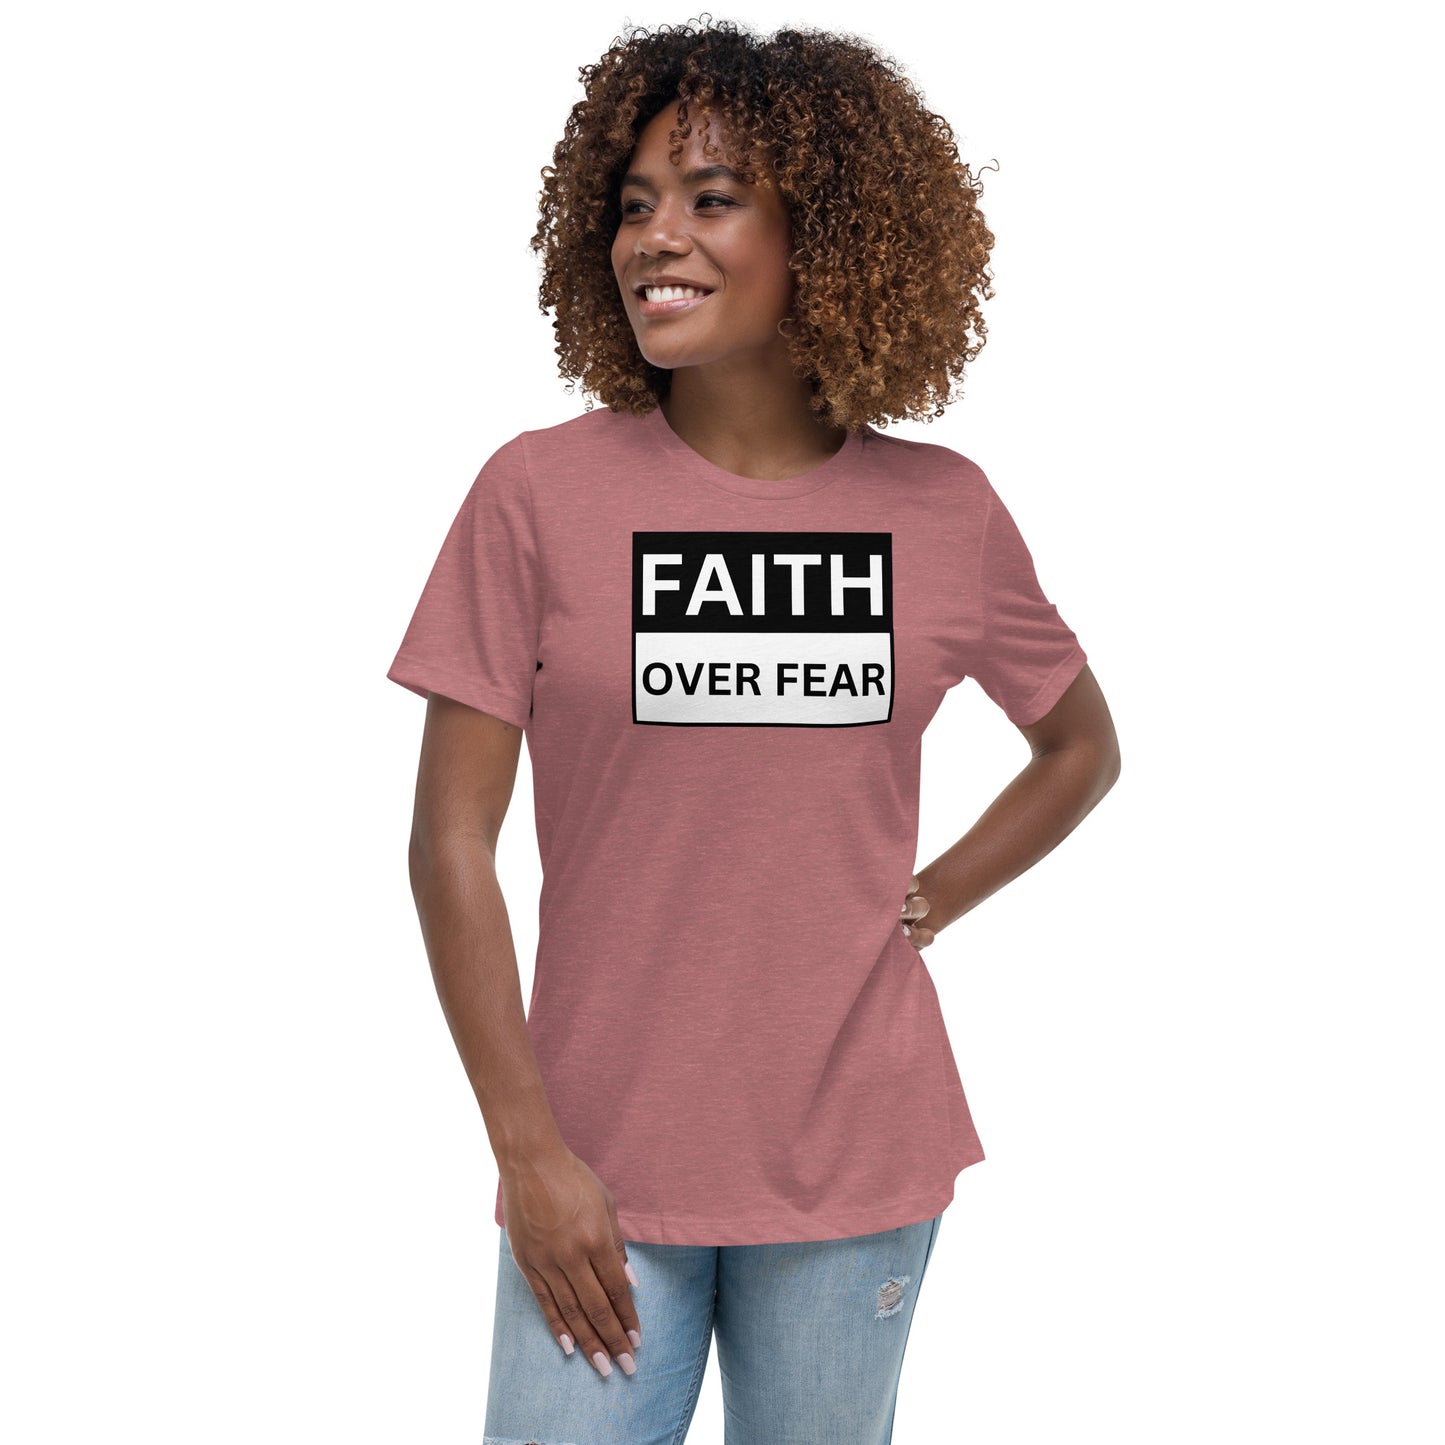 FAITH OVER FEAR - Women's Relaxed T-Shirt